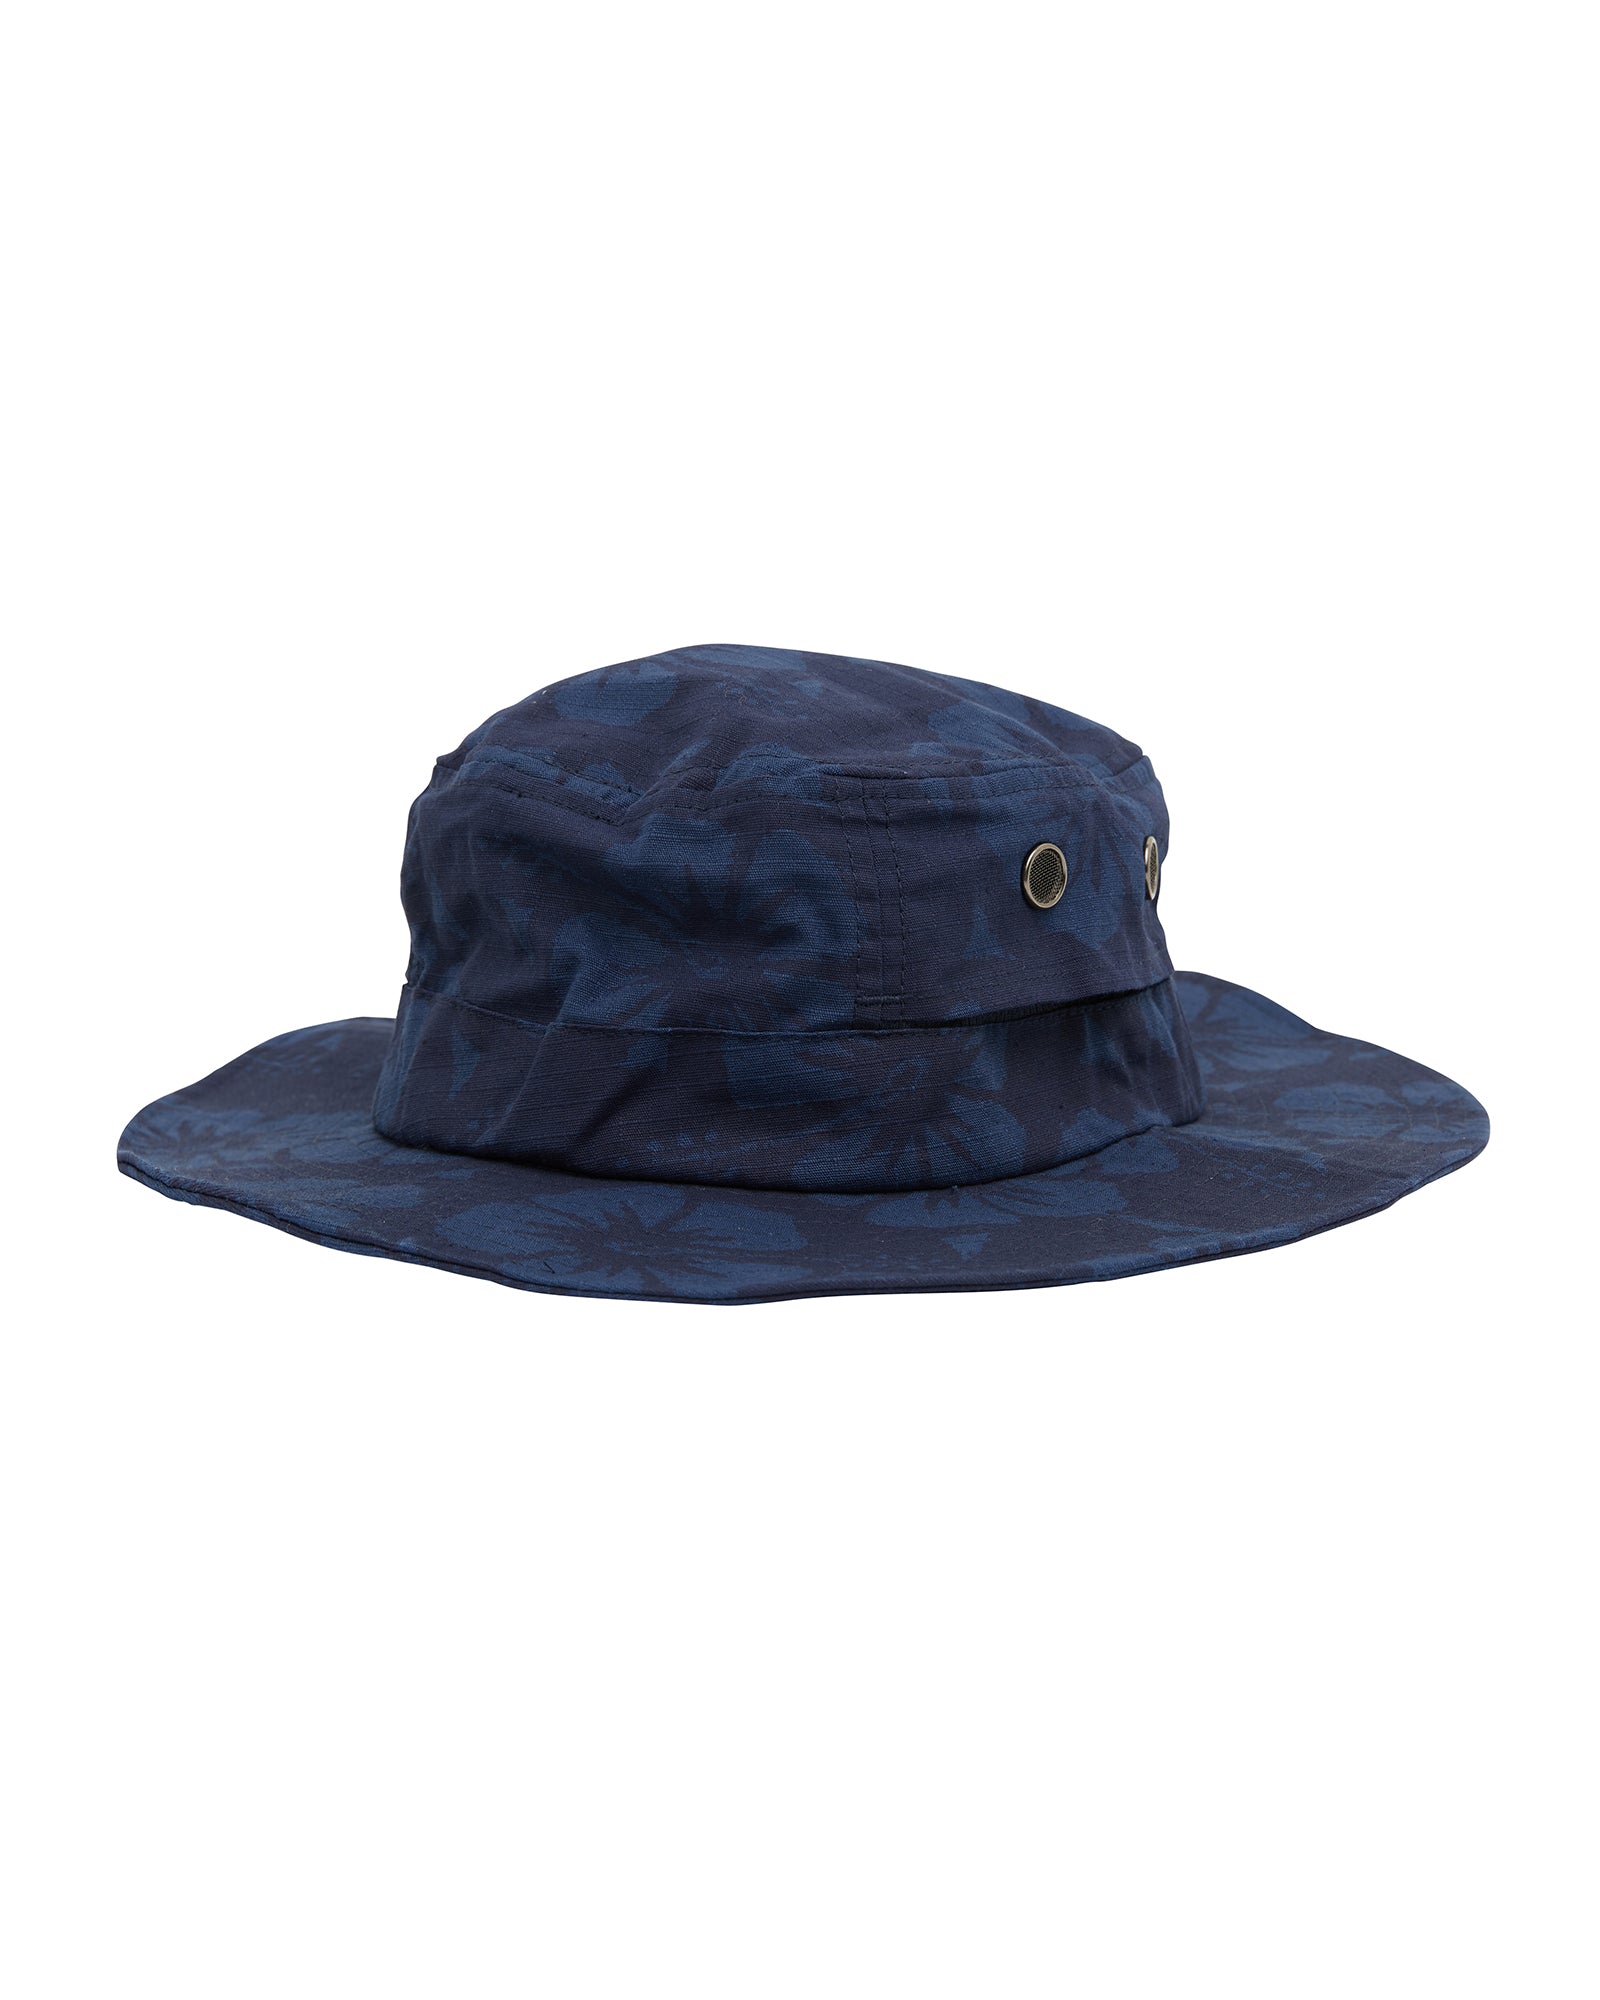 Adult Cotton Bucket Hats, Navy